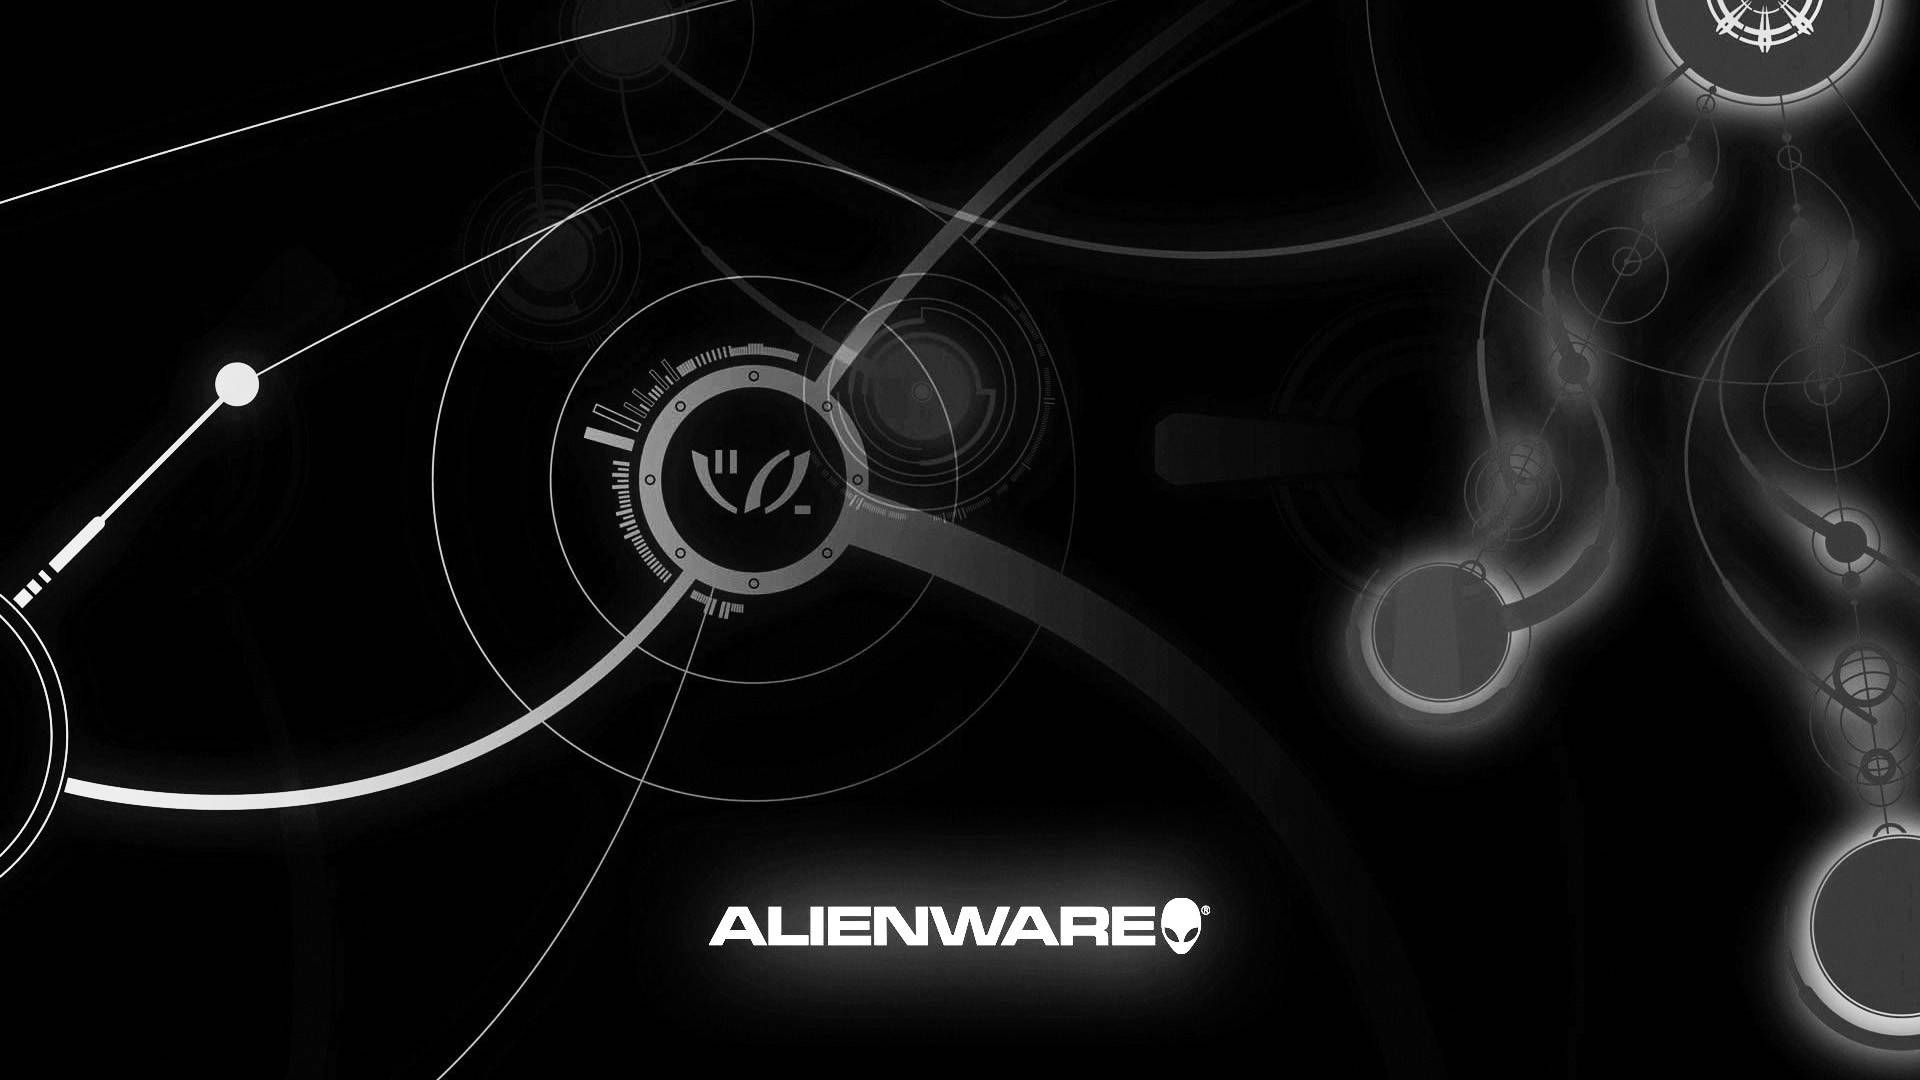 White Alienware Wordmark In Black Theme Wallpaper